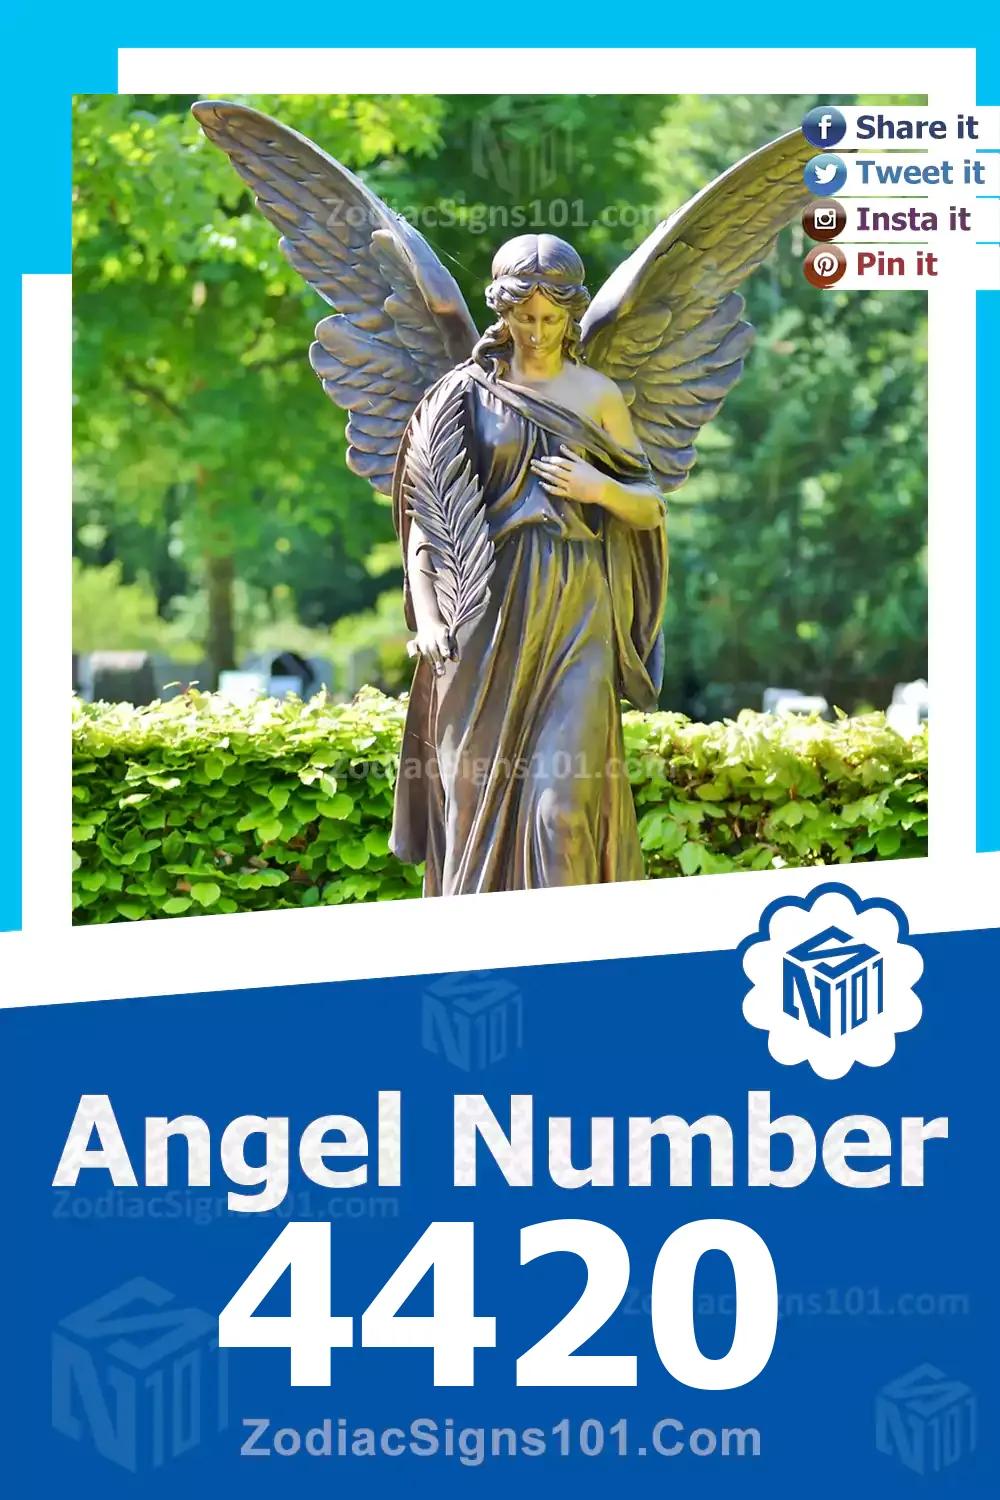 4420-Angel-Number-Meaning.jpg